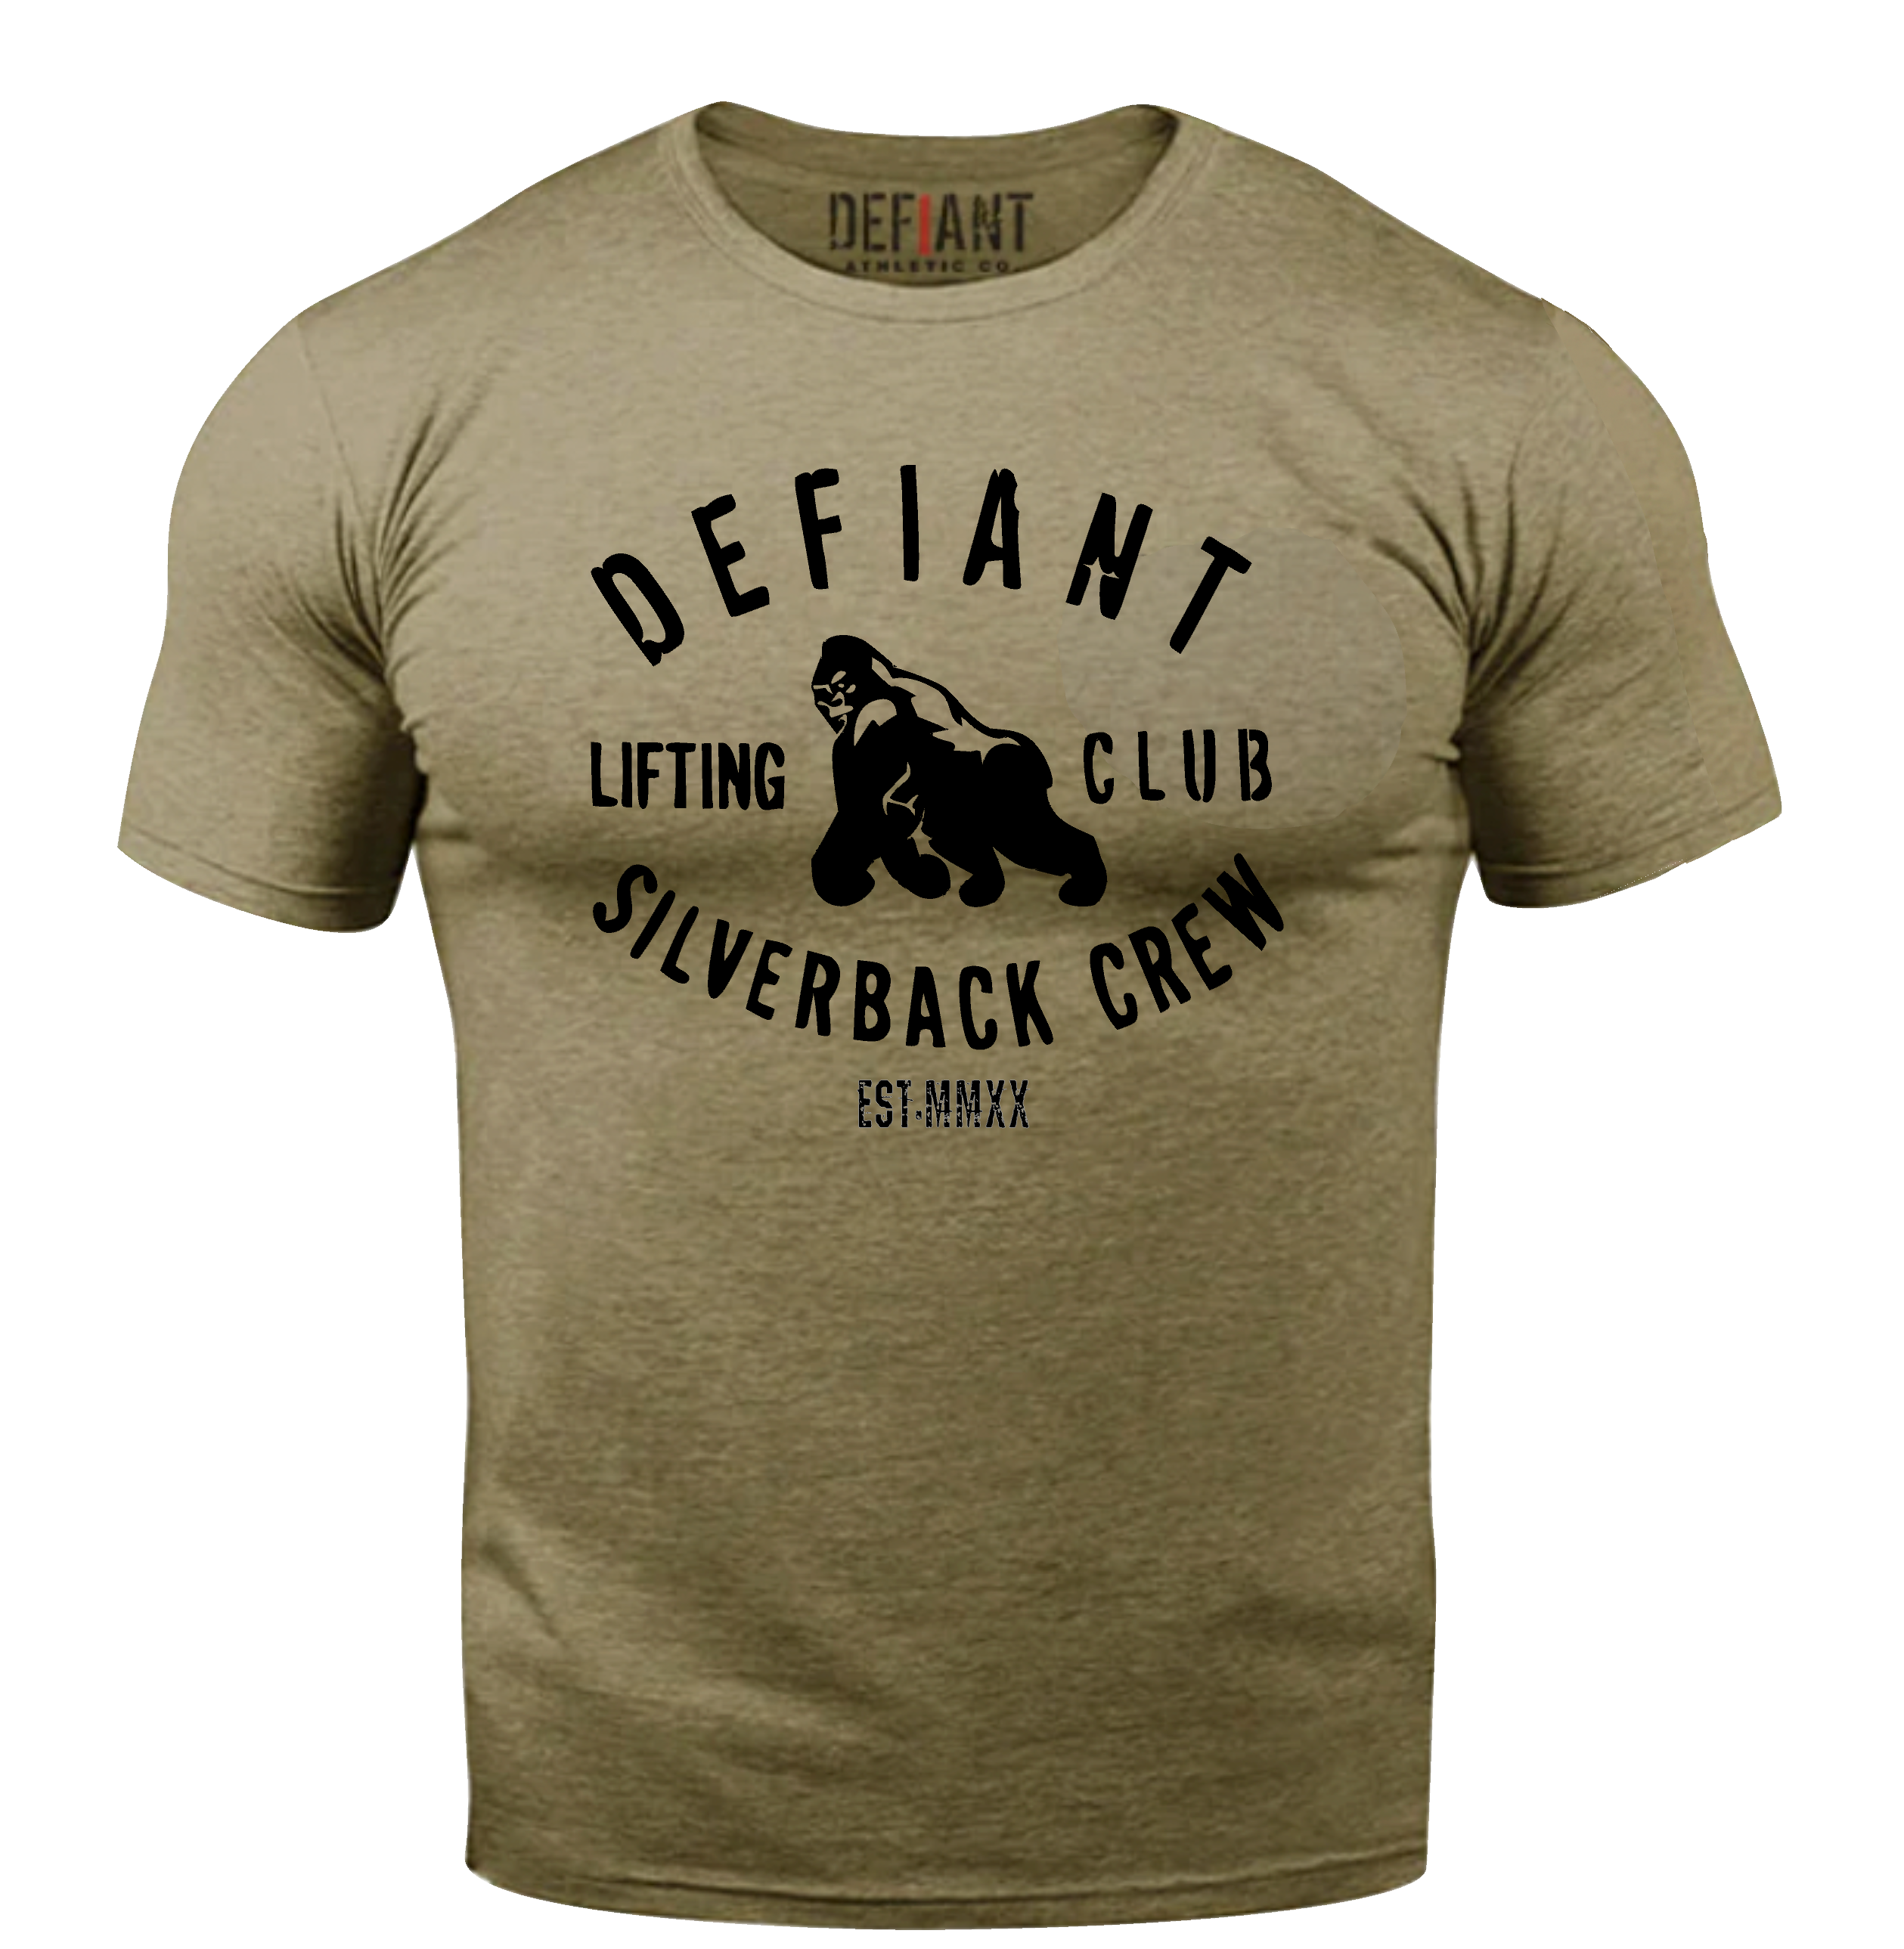 DEFIANT SILVERBACK CREW LIFTING CLUB - sizes Sm to 4xl – Defiant Athletic Co